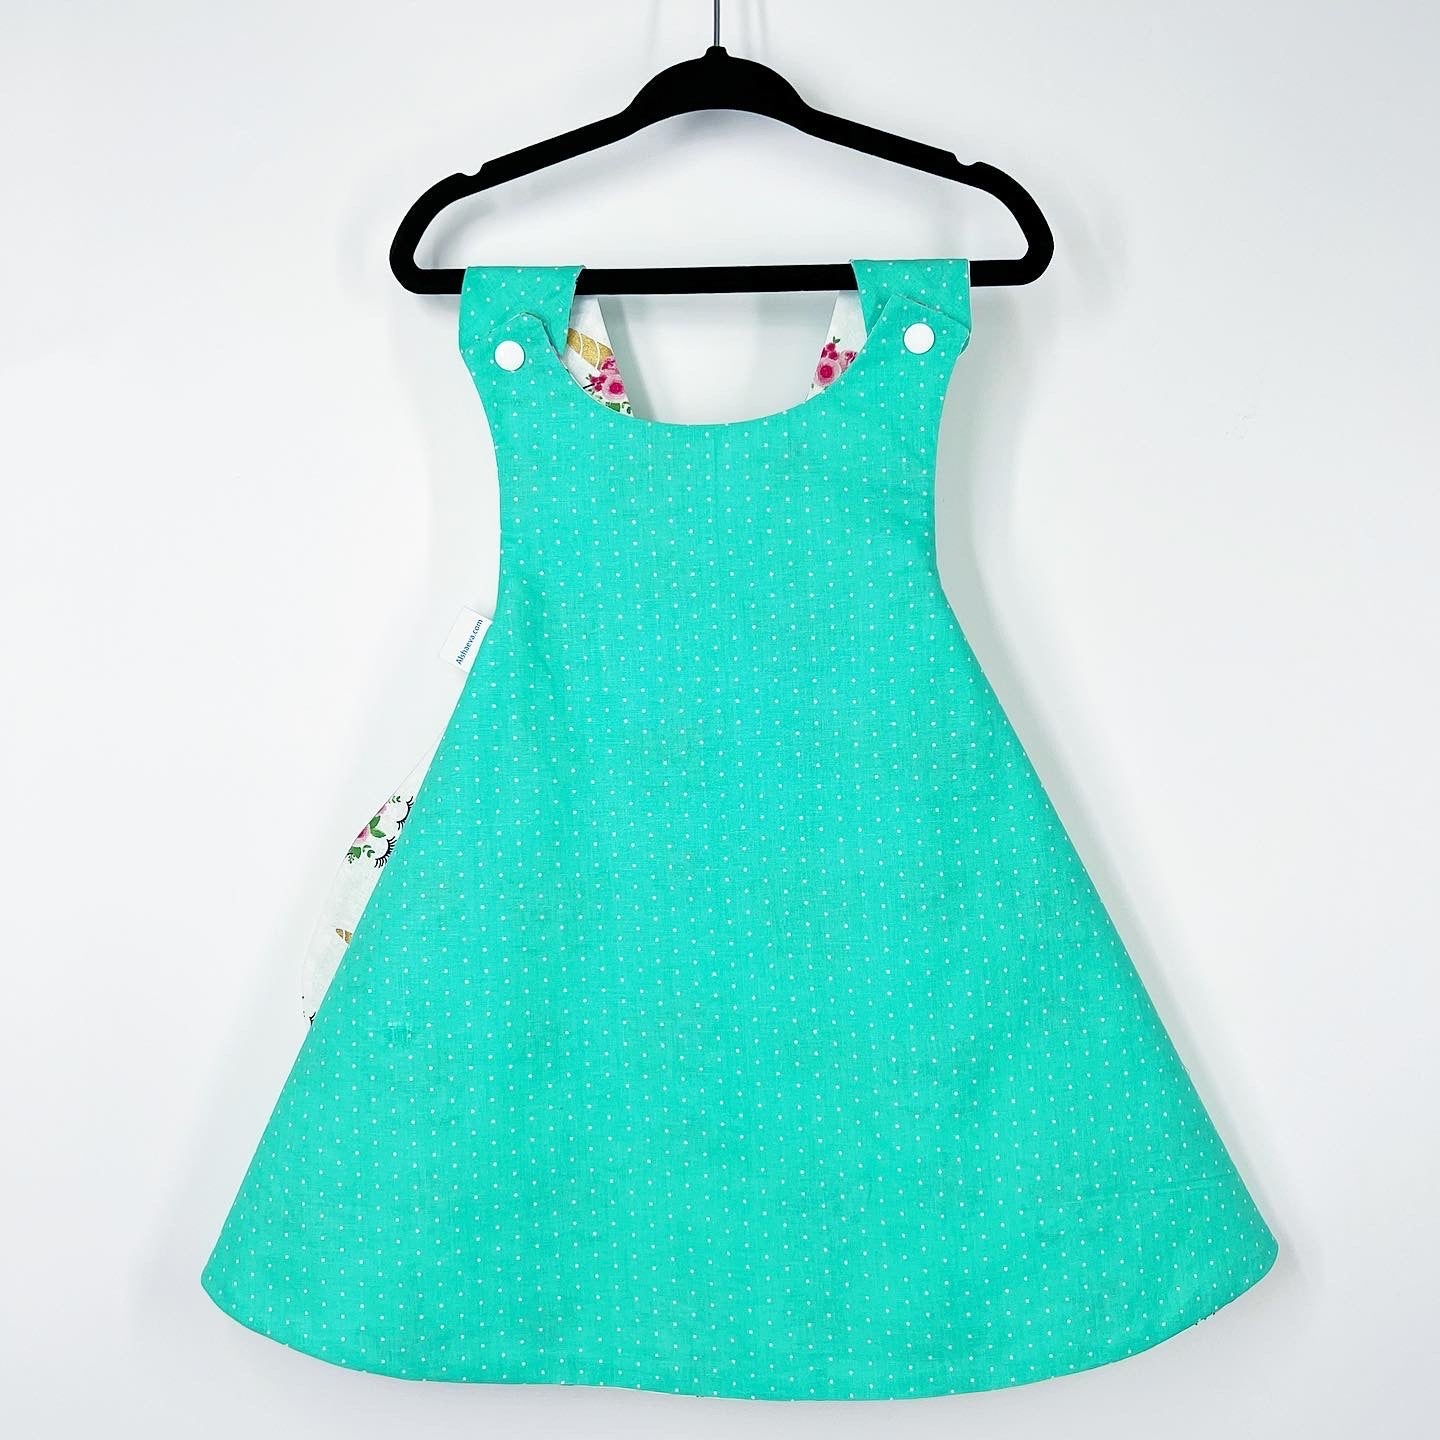 Reversible cotton dress “Teal polka dots”